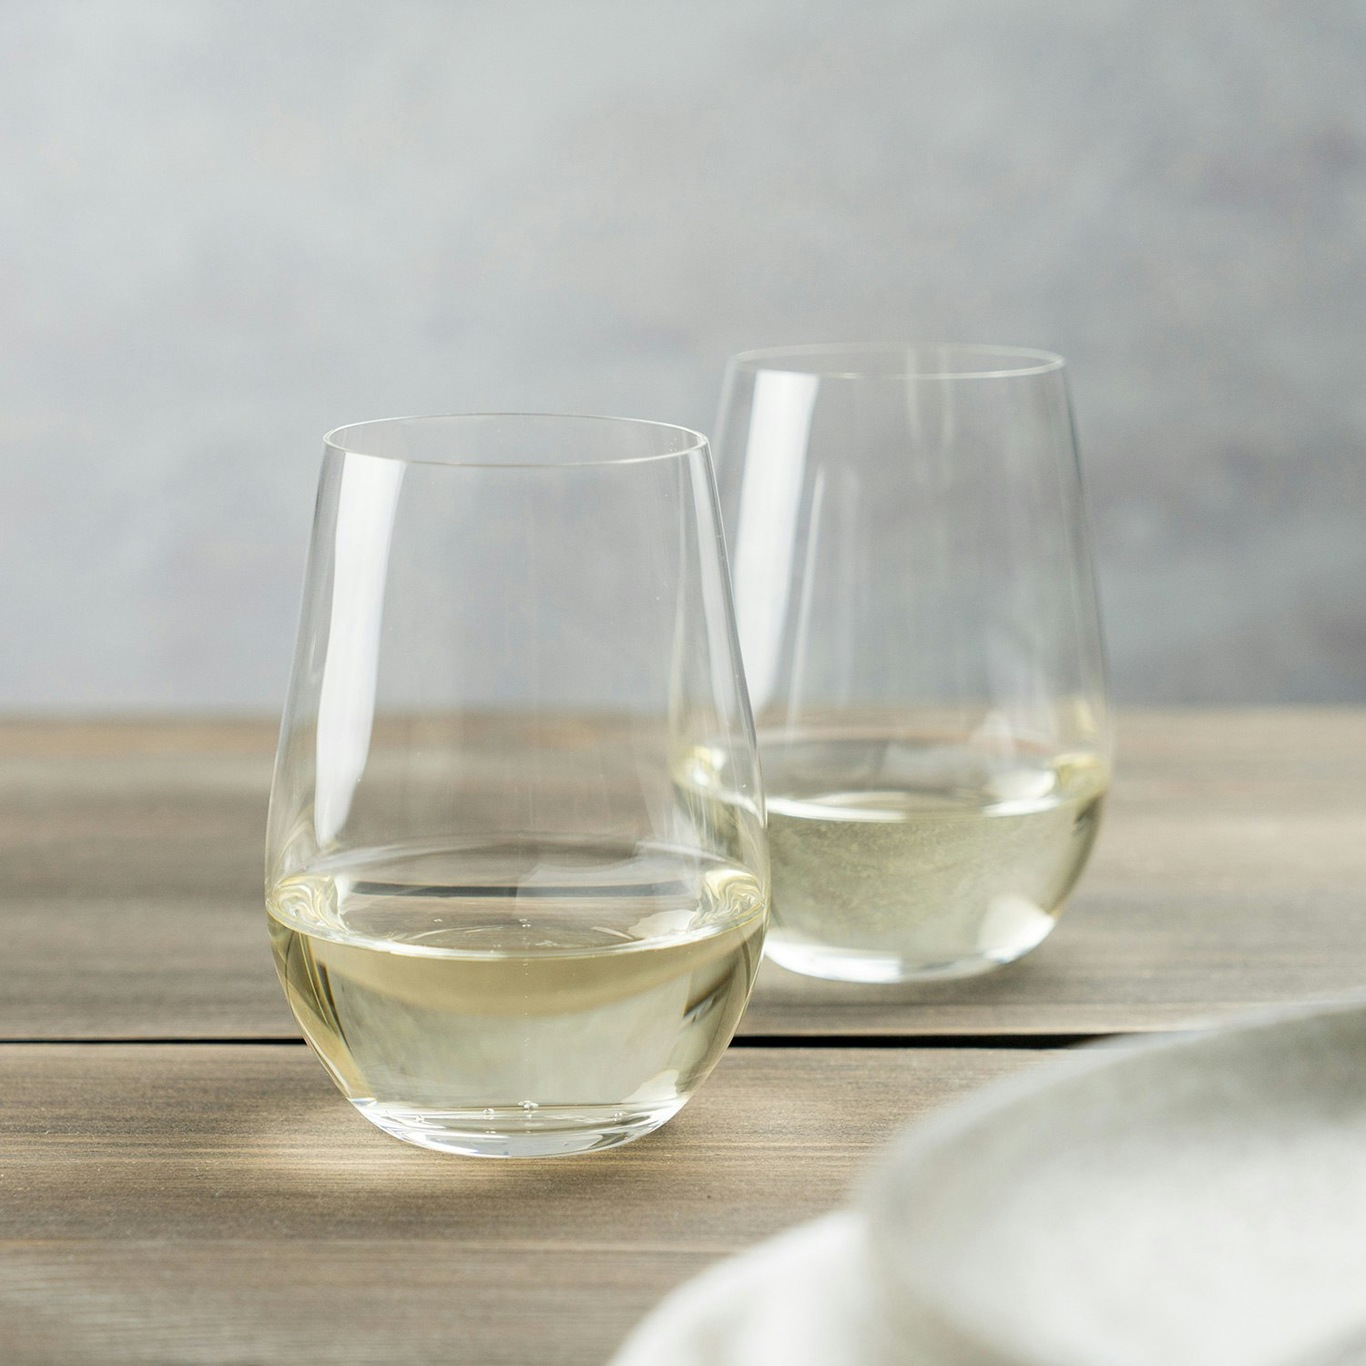 https://royaldesign.com/image/10/riedel-o-wine-tumbler-riesling-sauvignon-blanc-wine-glass-2-pack-1?w=800&quality=80